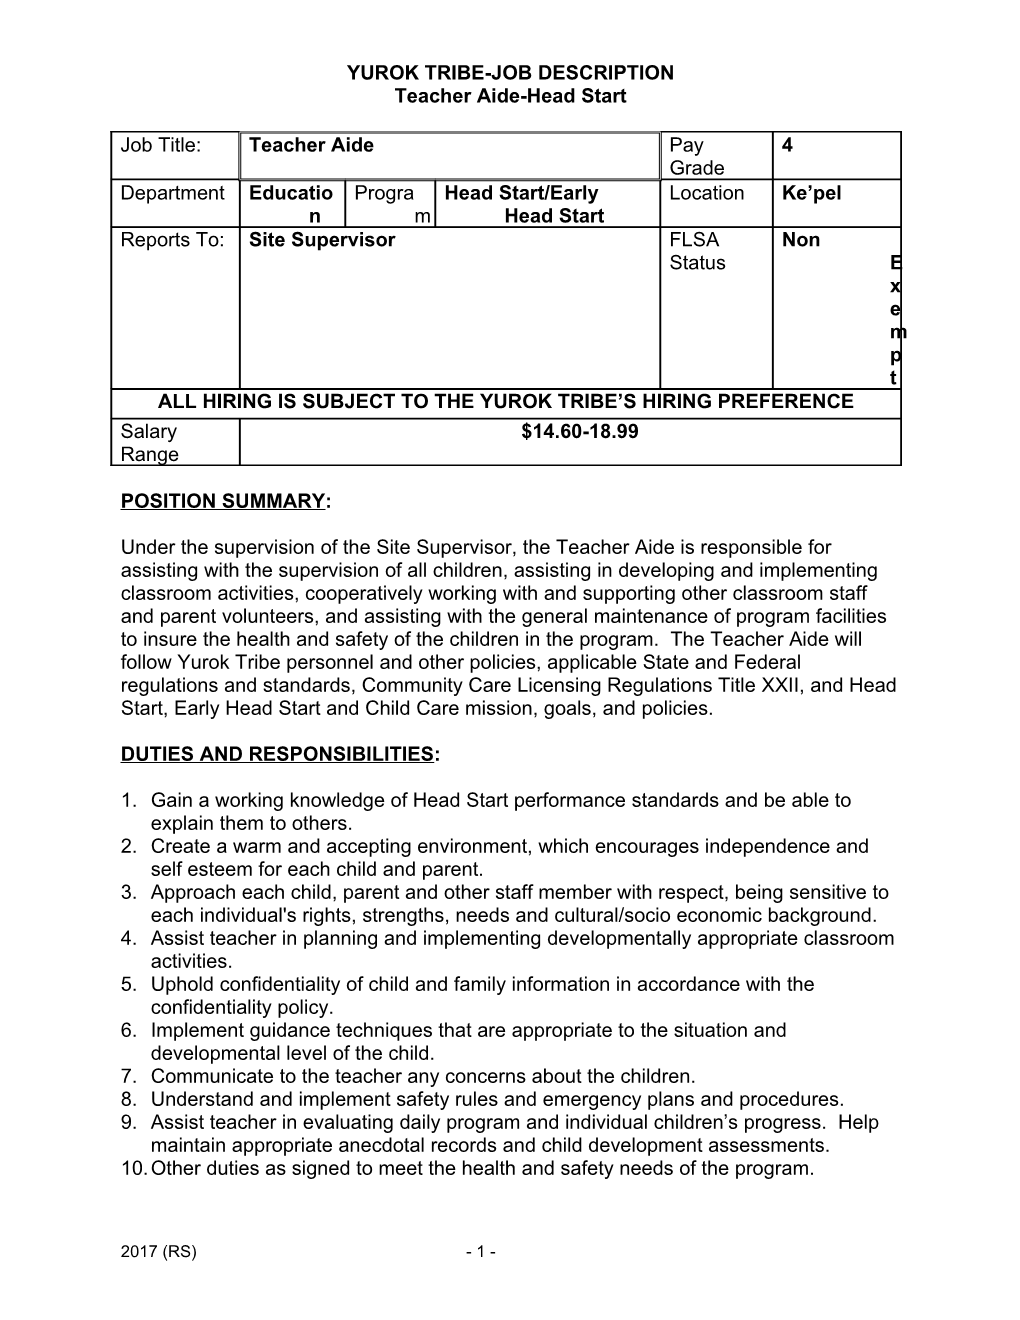 Yurok Tribe-Job Description s7